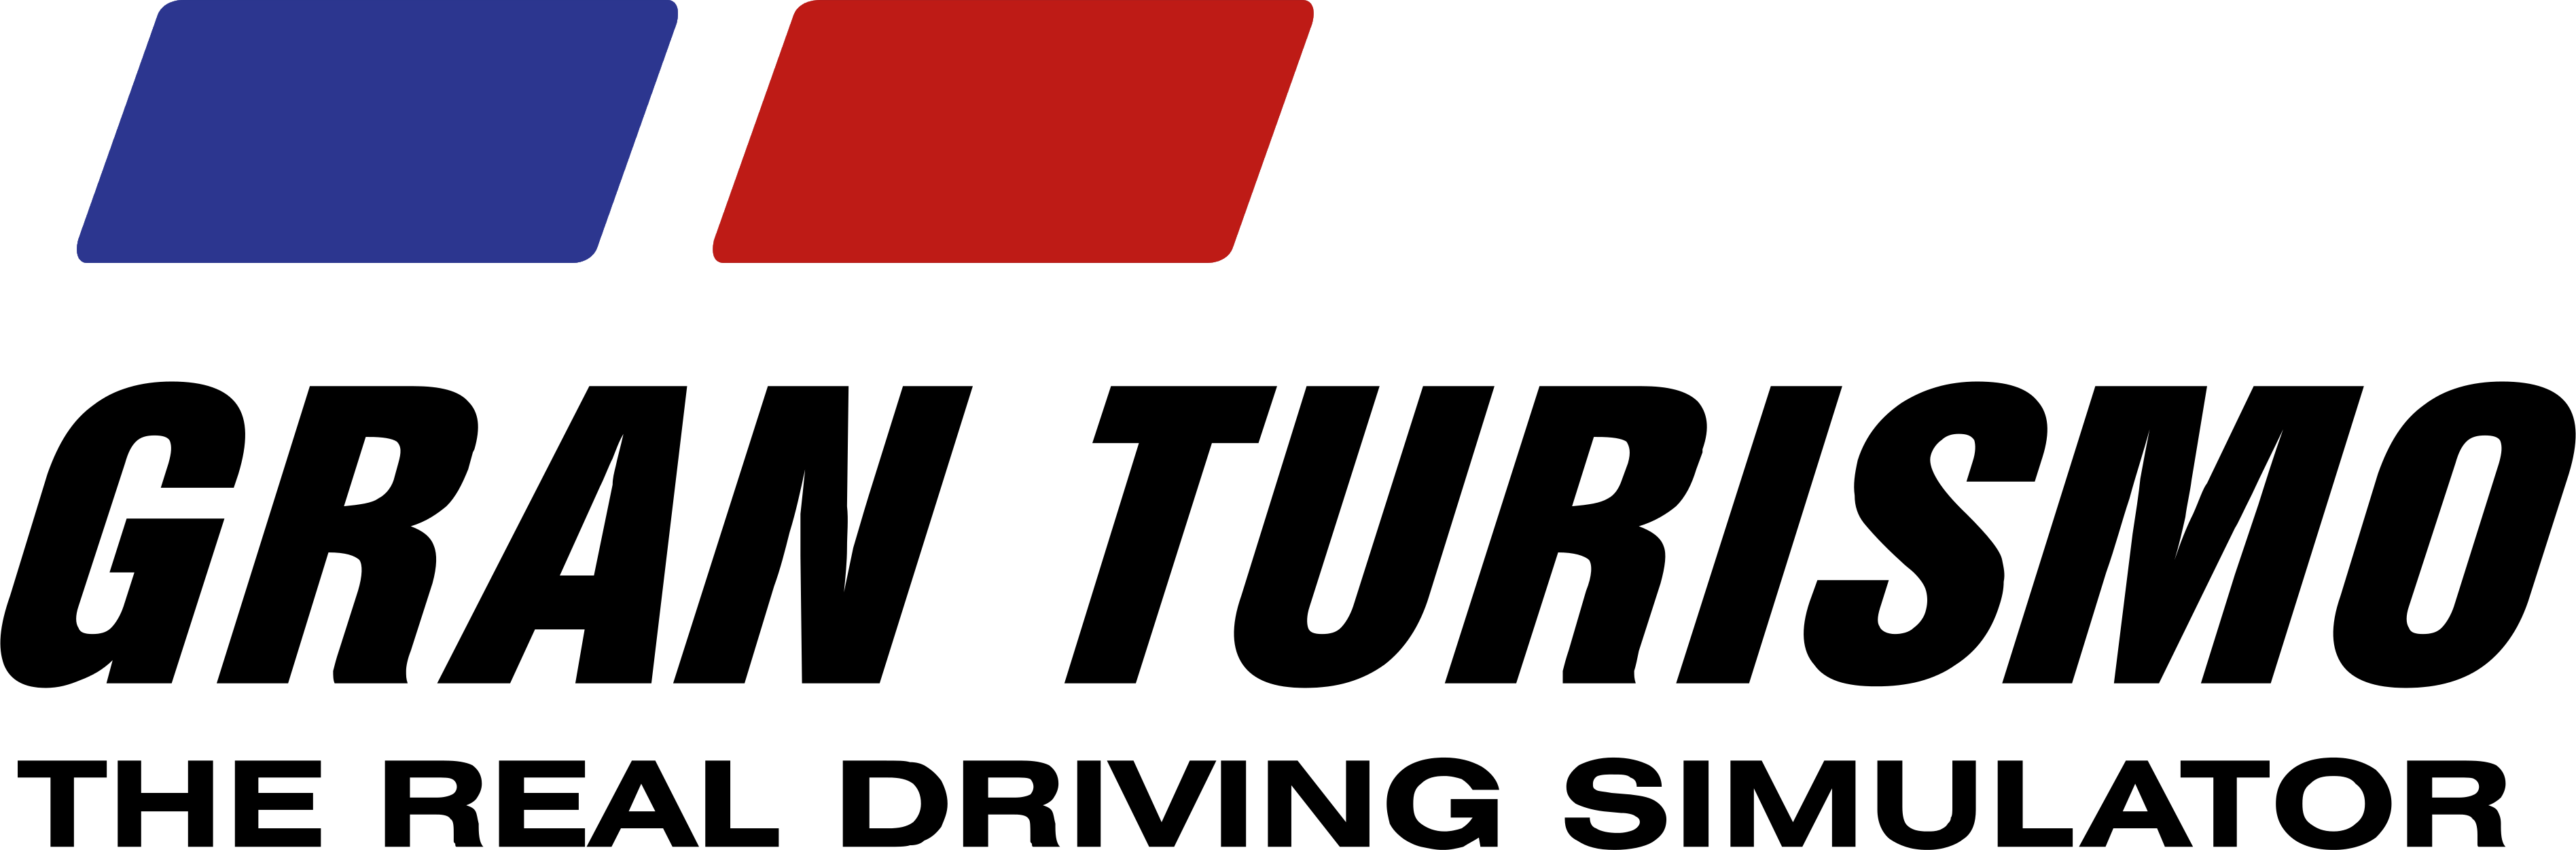 Gran Turismo Logo PNG Image SVG Clip arts